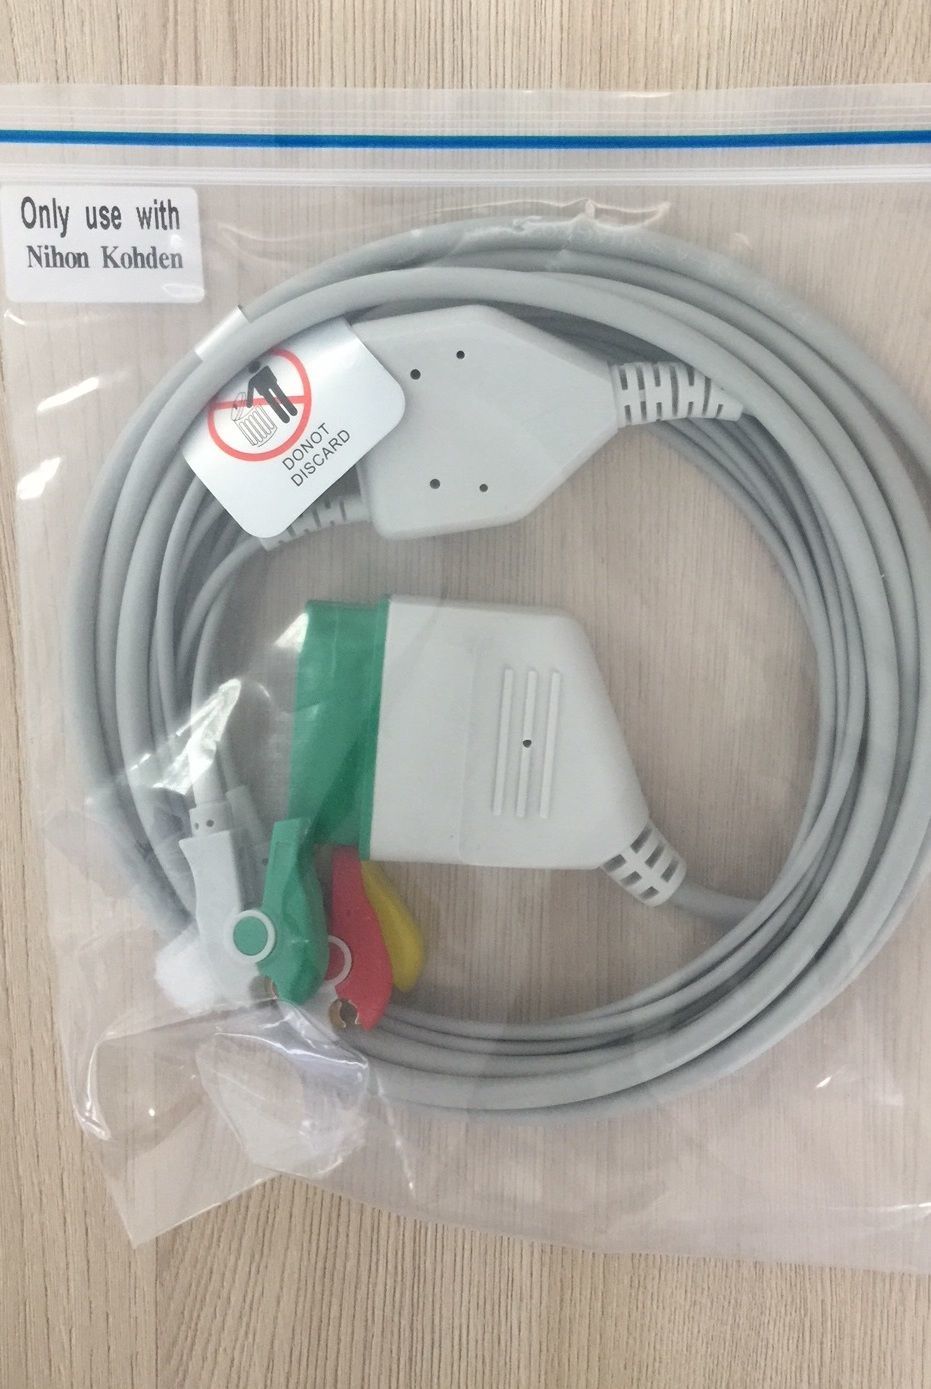 ECG 5 lead wires cable with grabber for Nihon_สายลีดอีซีจีแบบก้ามปูสำหรับเครื่องมอนิเตอร์สัญญาณชีพ Nihon kohden